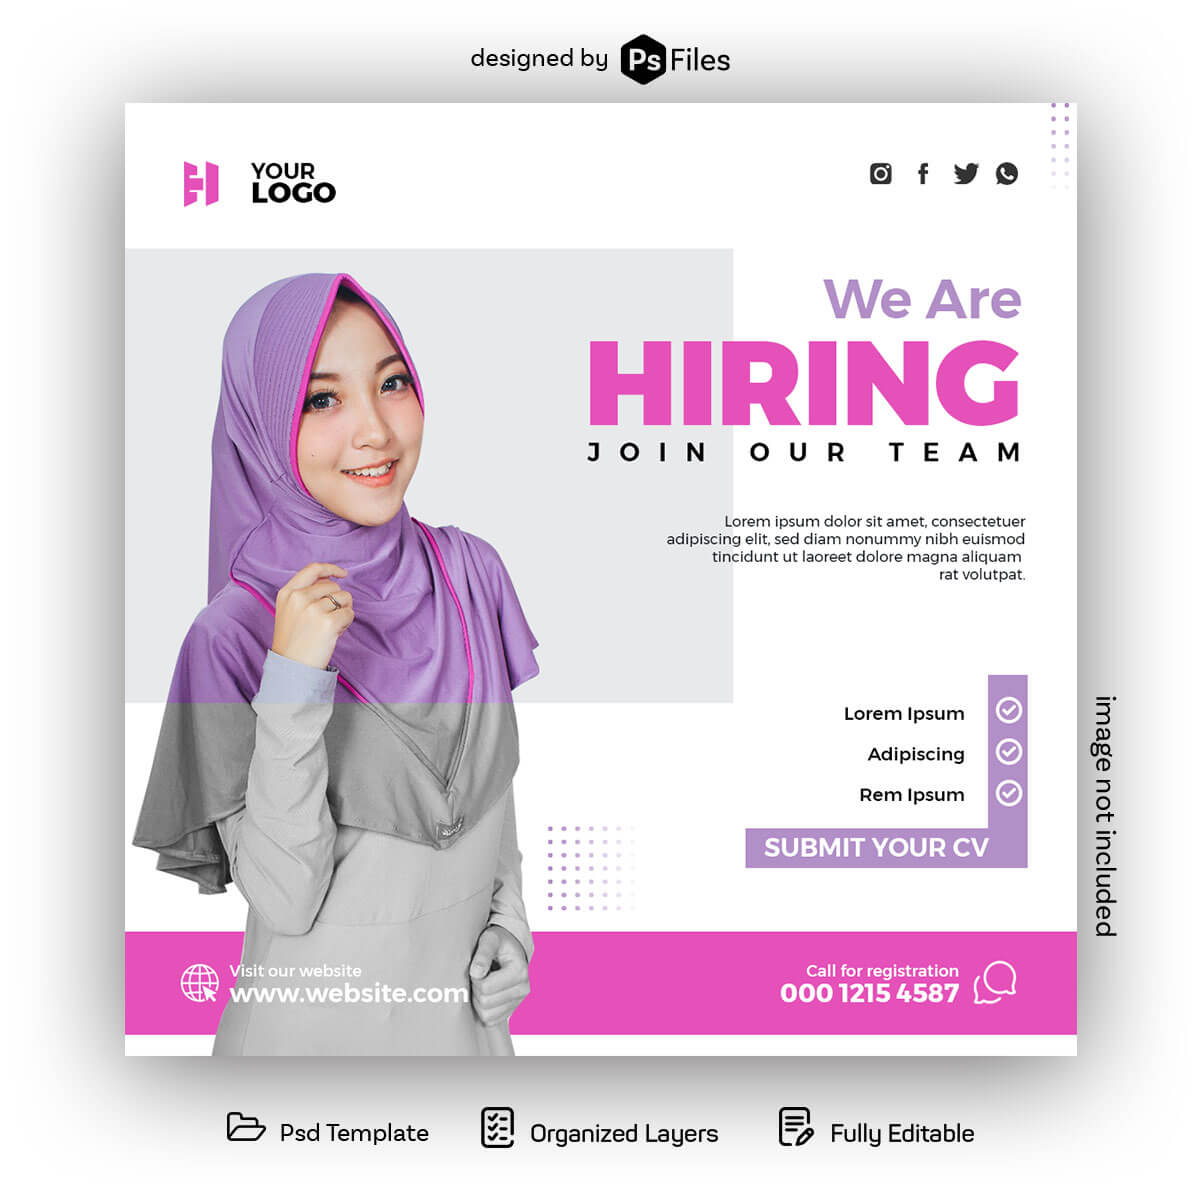 We are Hiring Job Vacancy Social Media Banner or Instagram Post Template Design